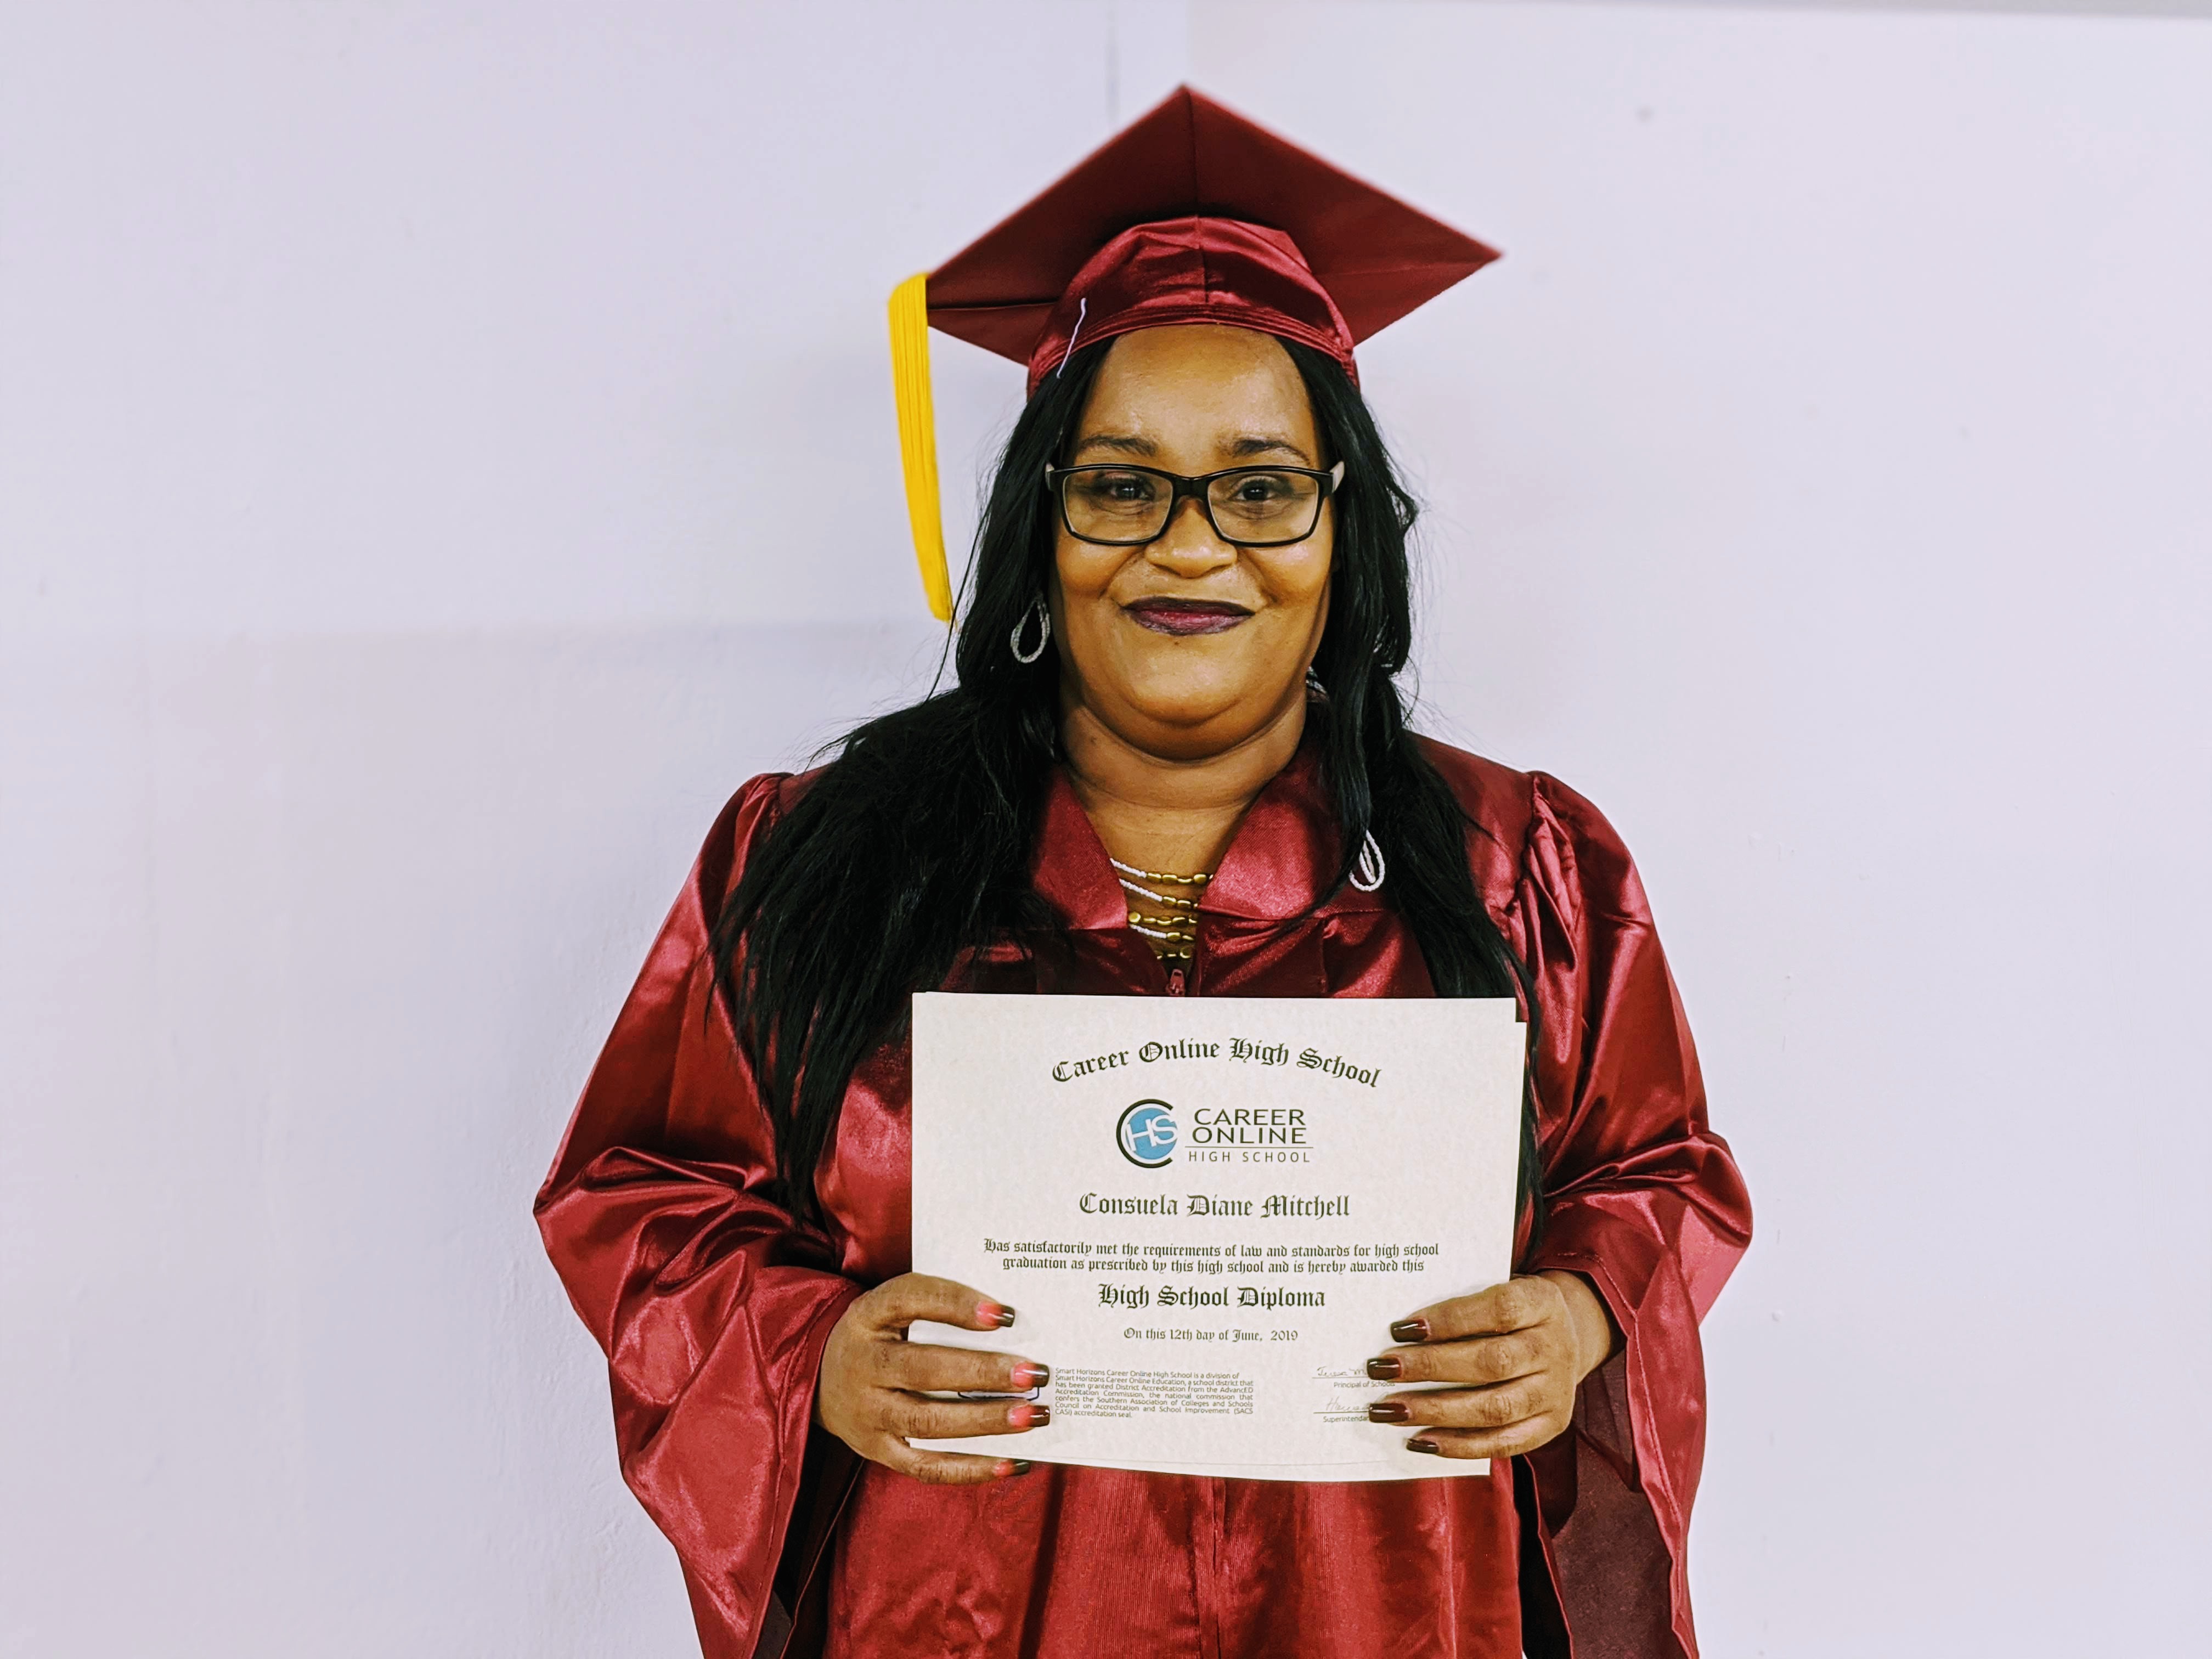 Online High School Diploma Program Celebrates Last Graduating